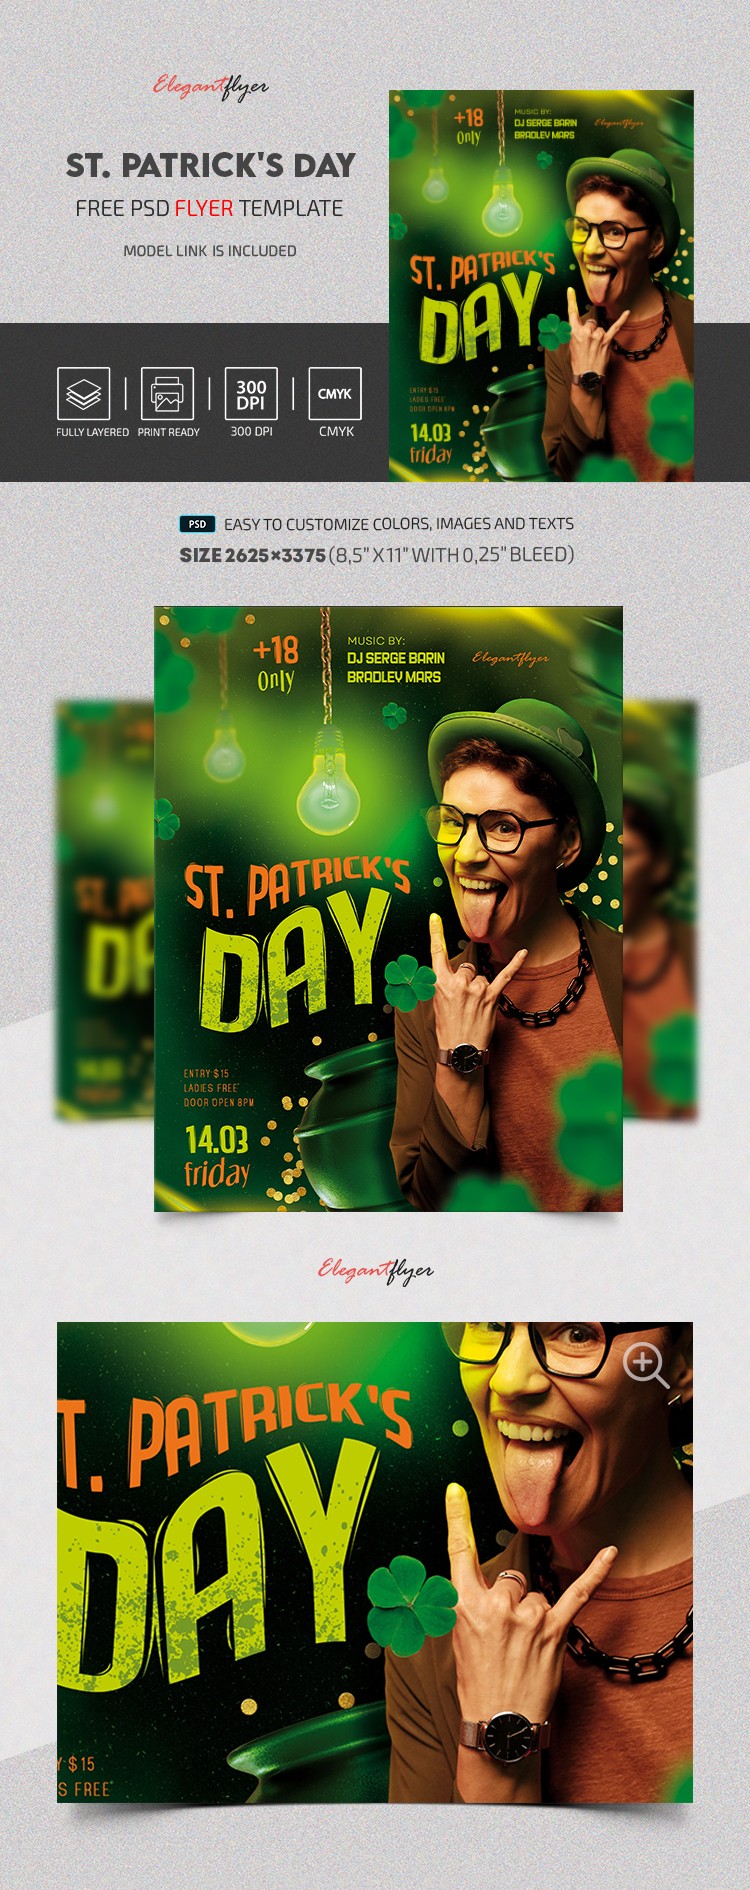 St. Patrick's Day Flyer by ElegantFlyer